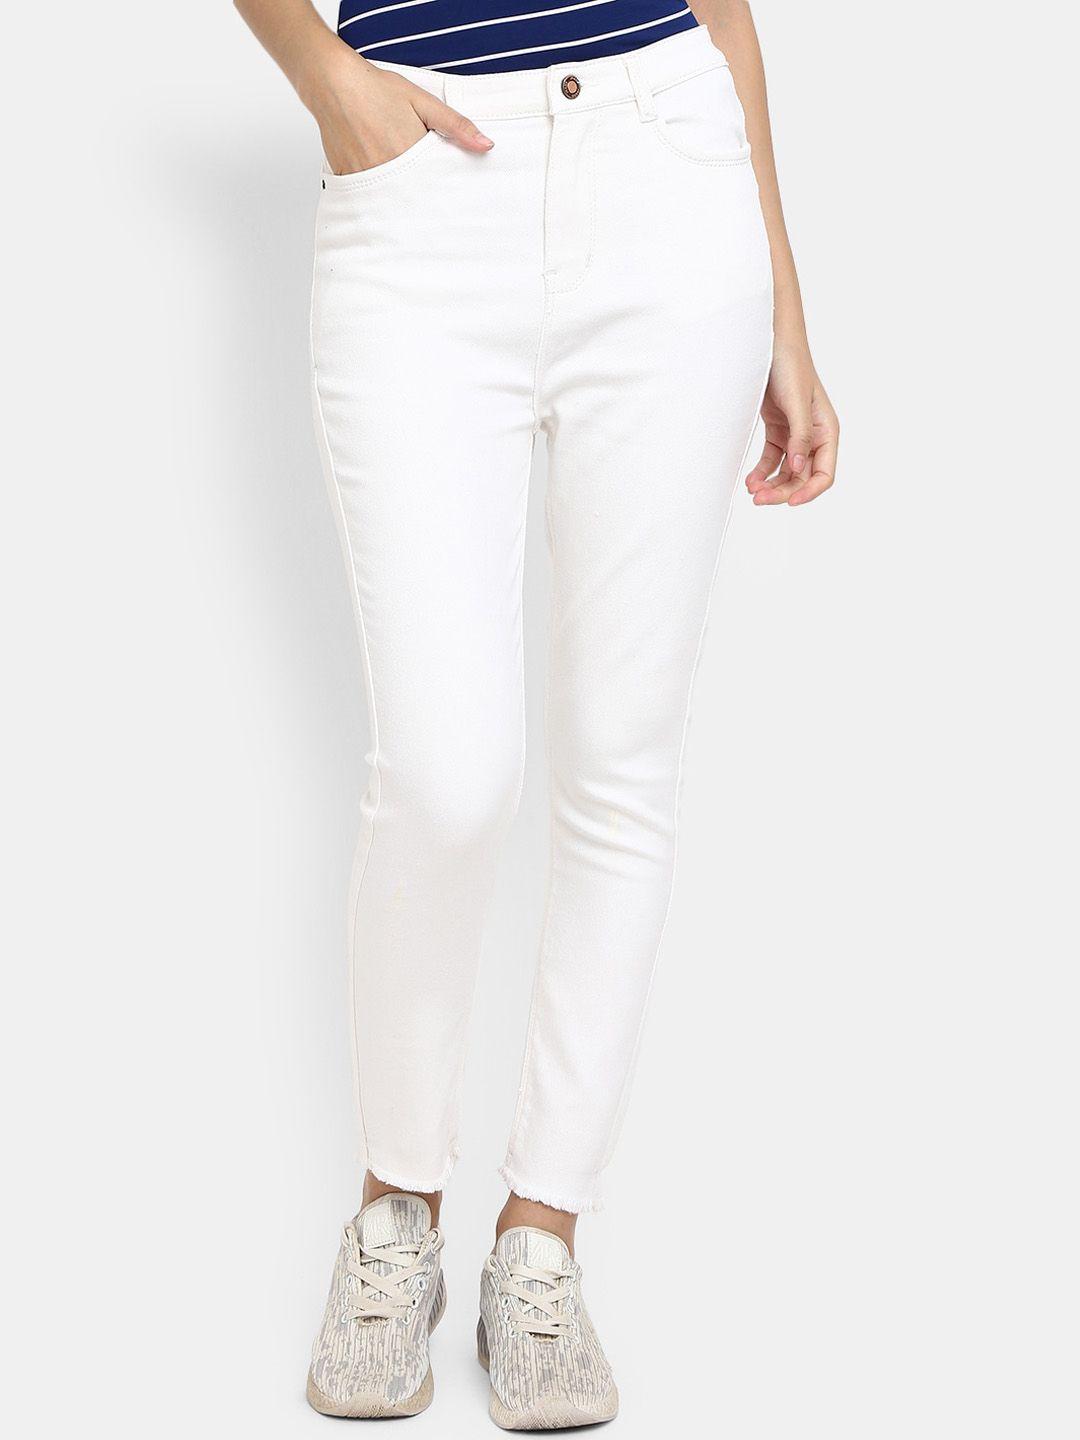 v-mart women white classic slim fit jeans